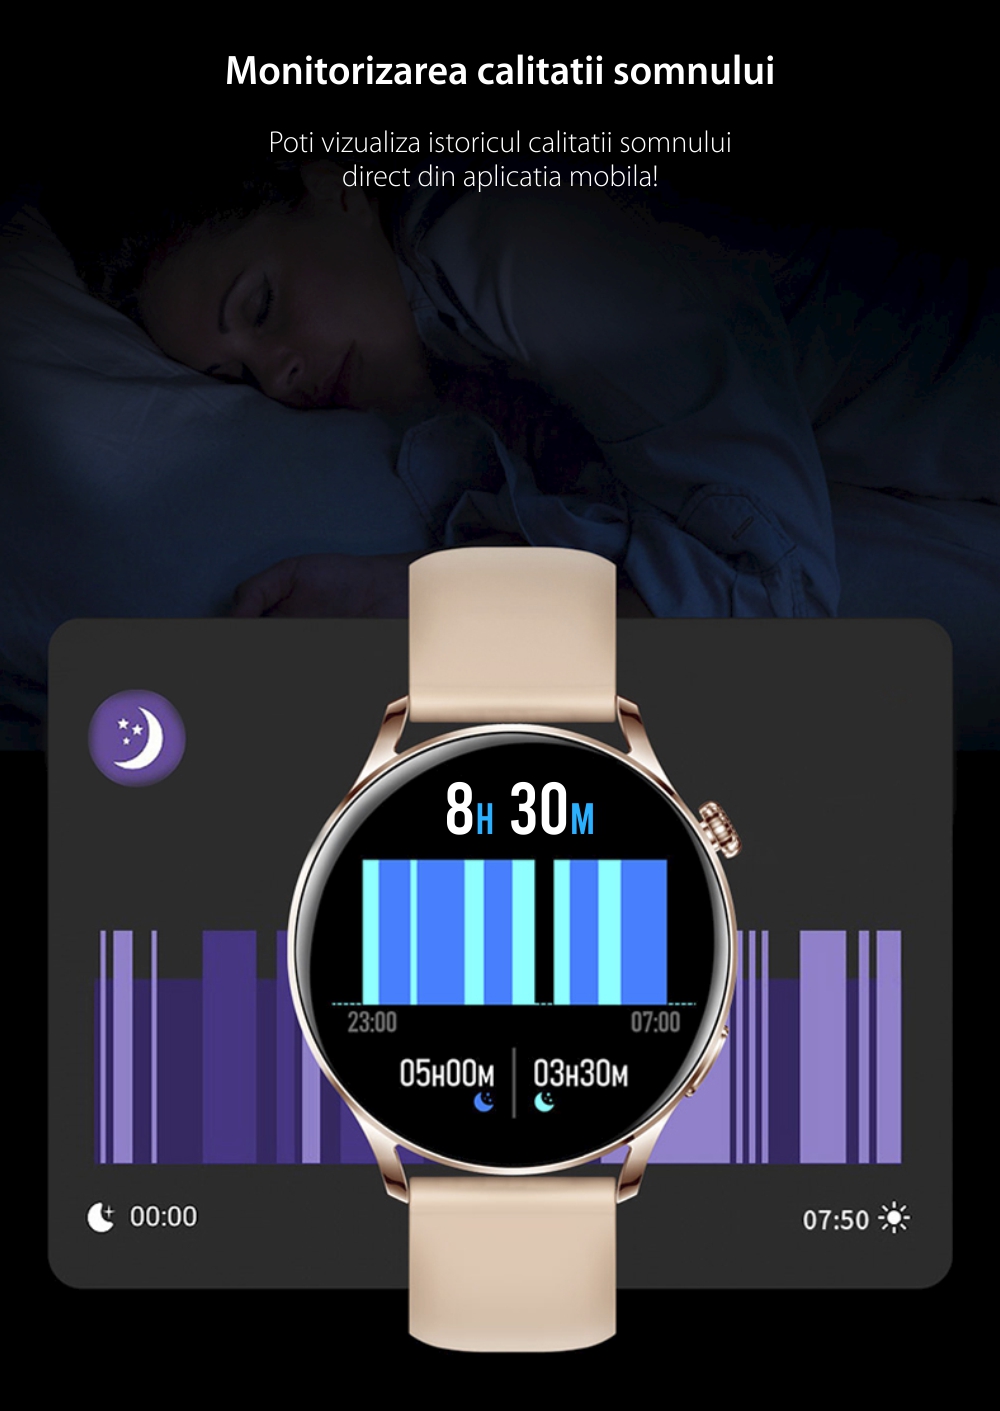 Ceas Smartwatch XK Fitness AK37 cu Functii monitorizare sanatate, Notificari, Bluetooth, Cronometru, Bratara otel, Auriu